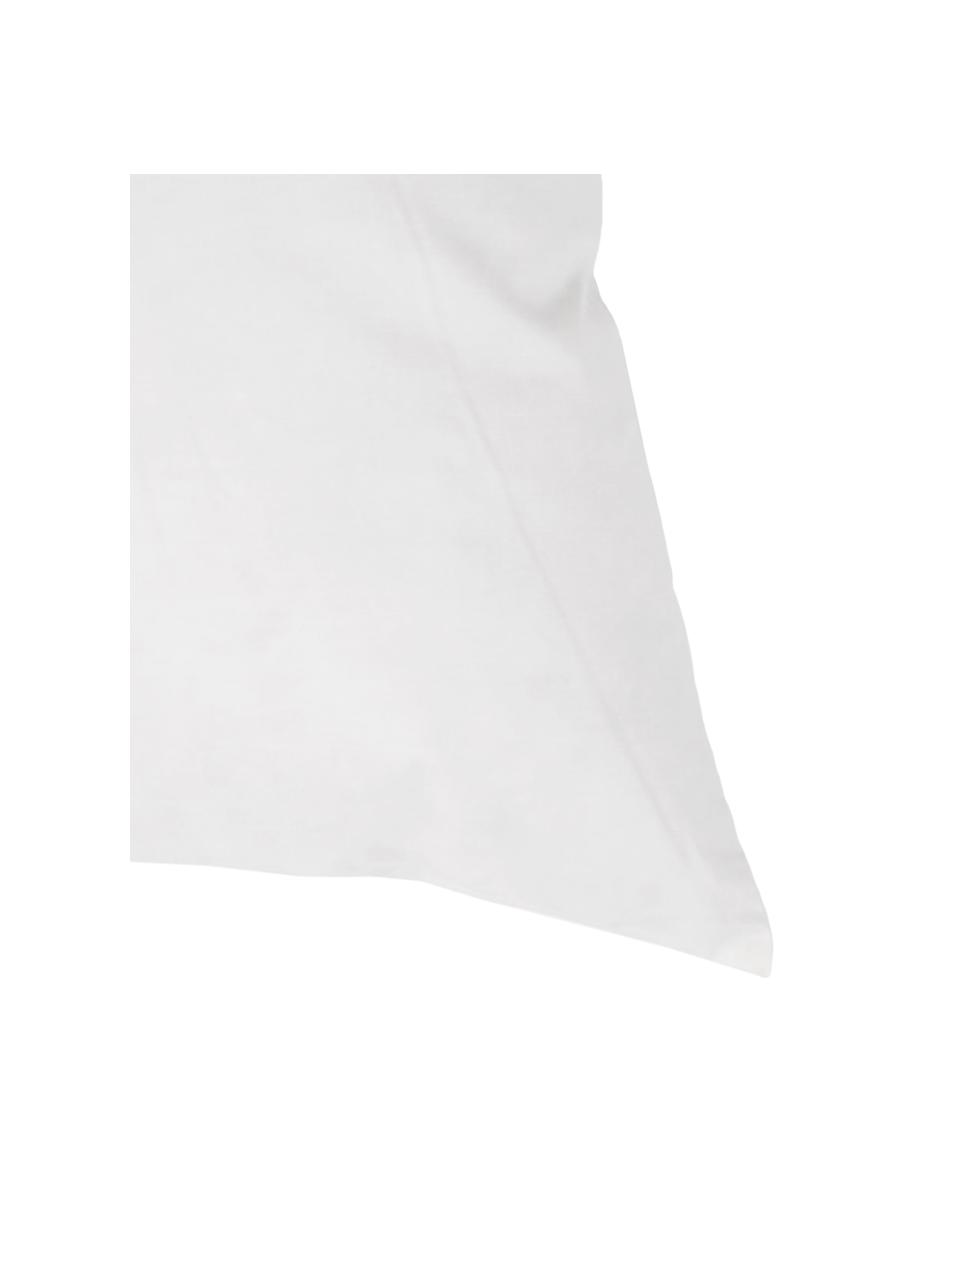 Relleno de cojín Komfort, 40 x 40, Funda: percal Mako, 100% algodón, Blanco, An 40 x L 40 cm